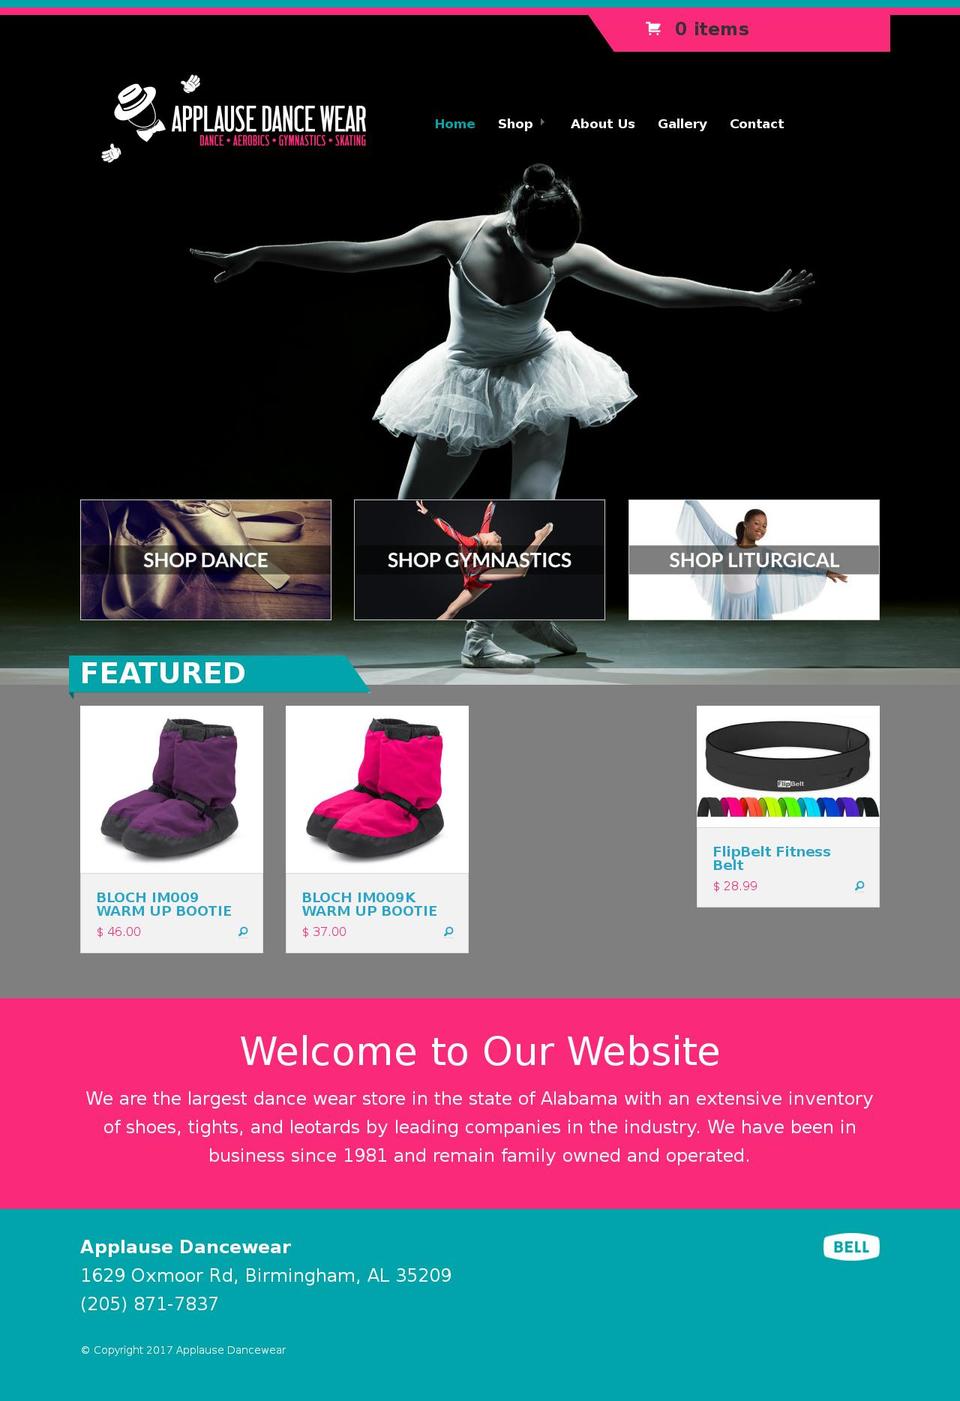 applausedancewear.net shopify website screenshot